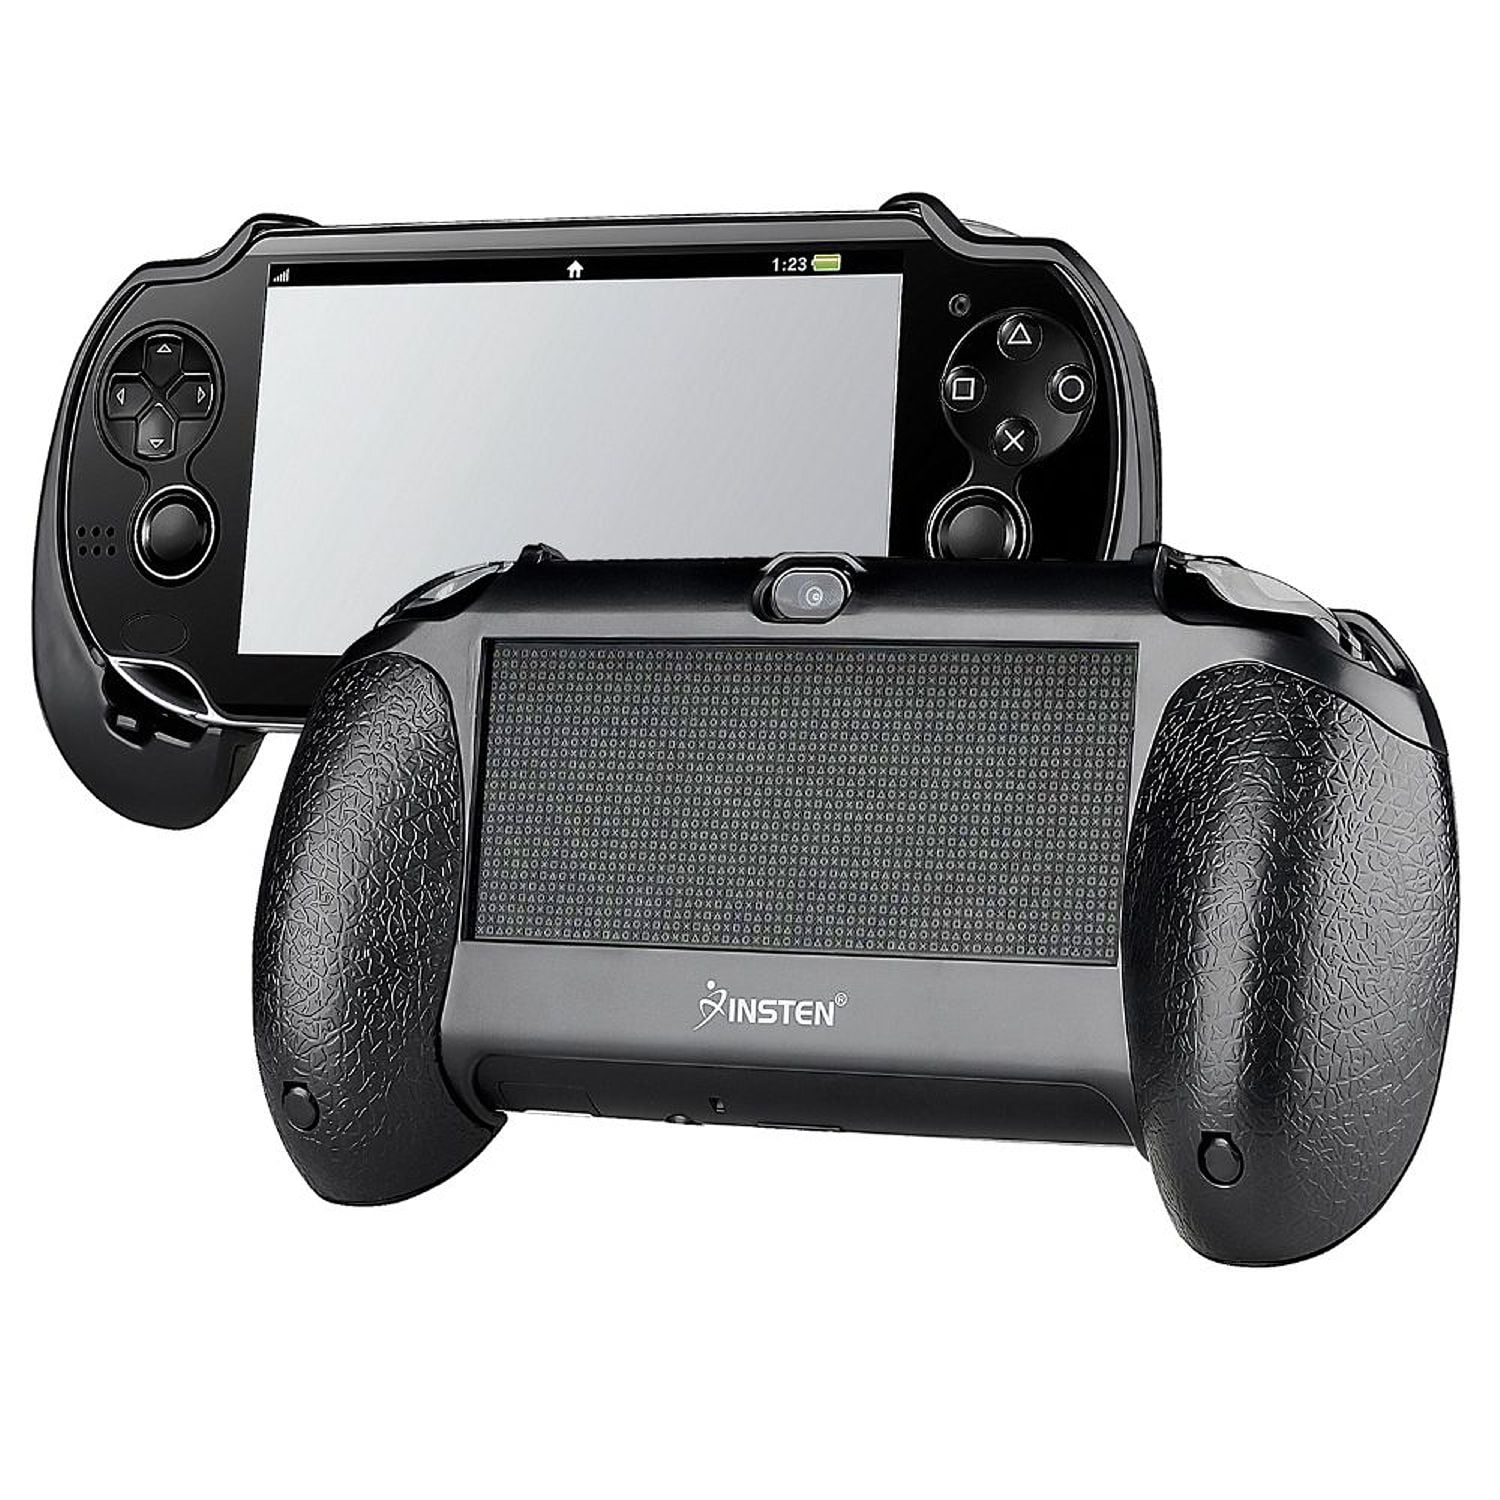 Roblox On Playstation Vita